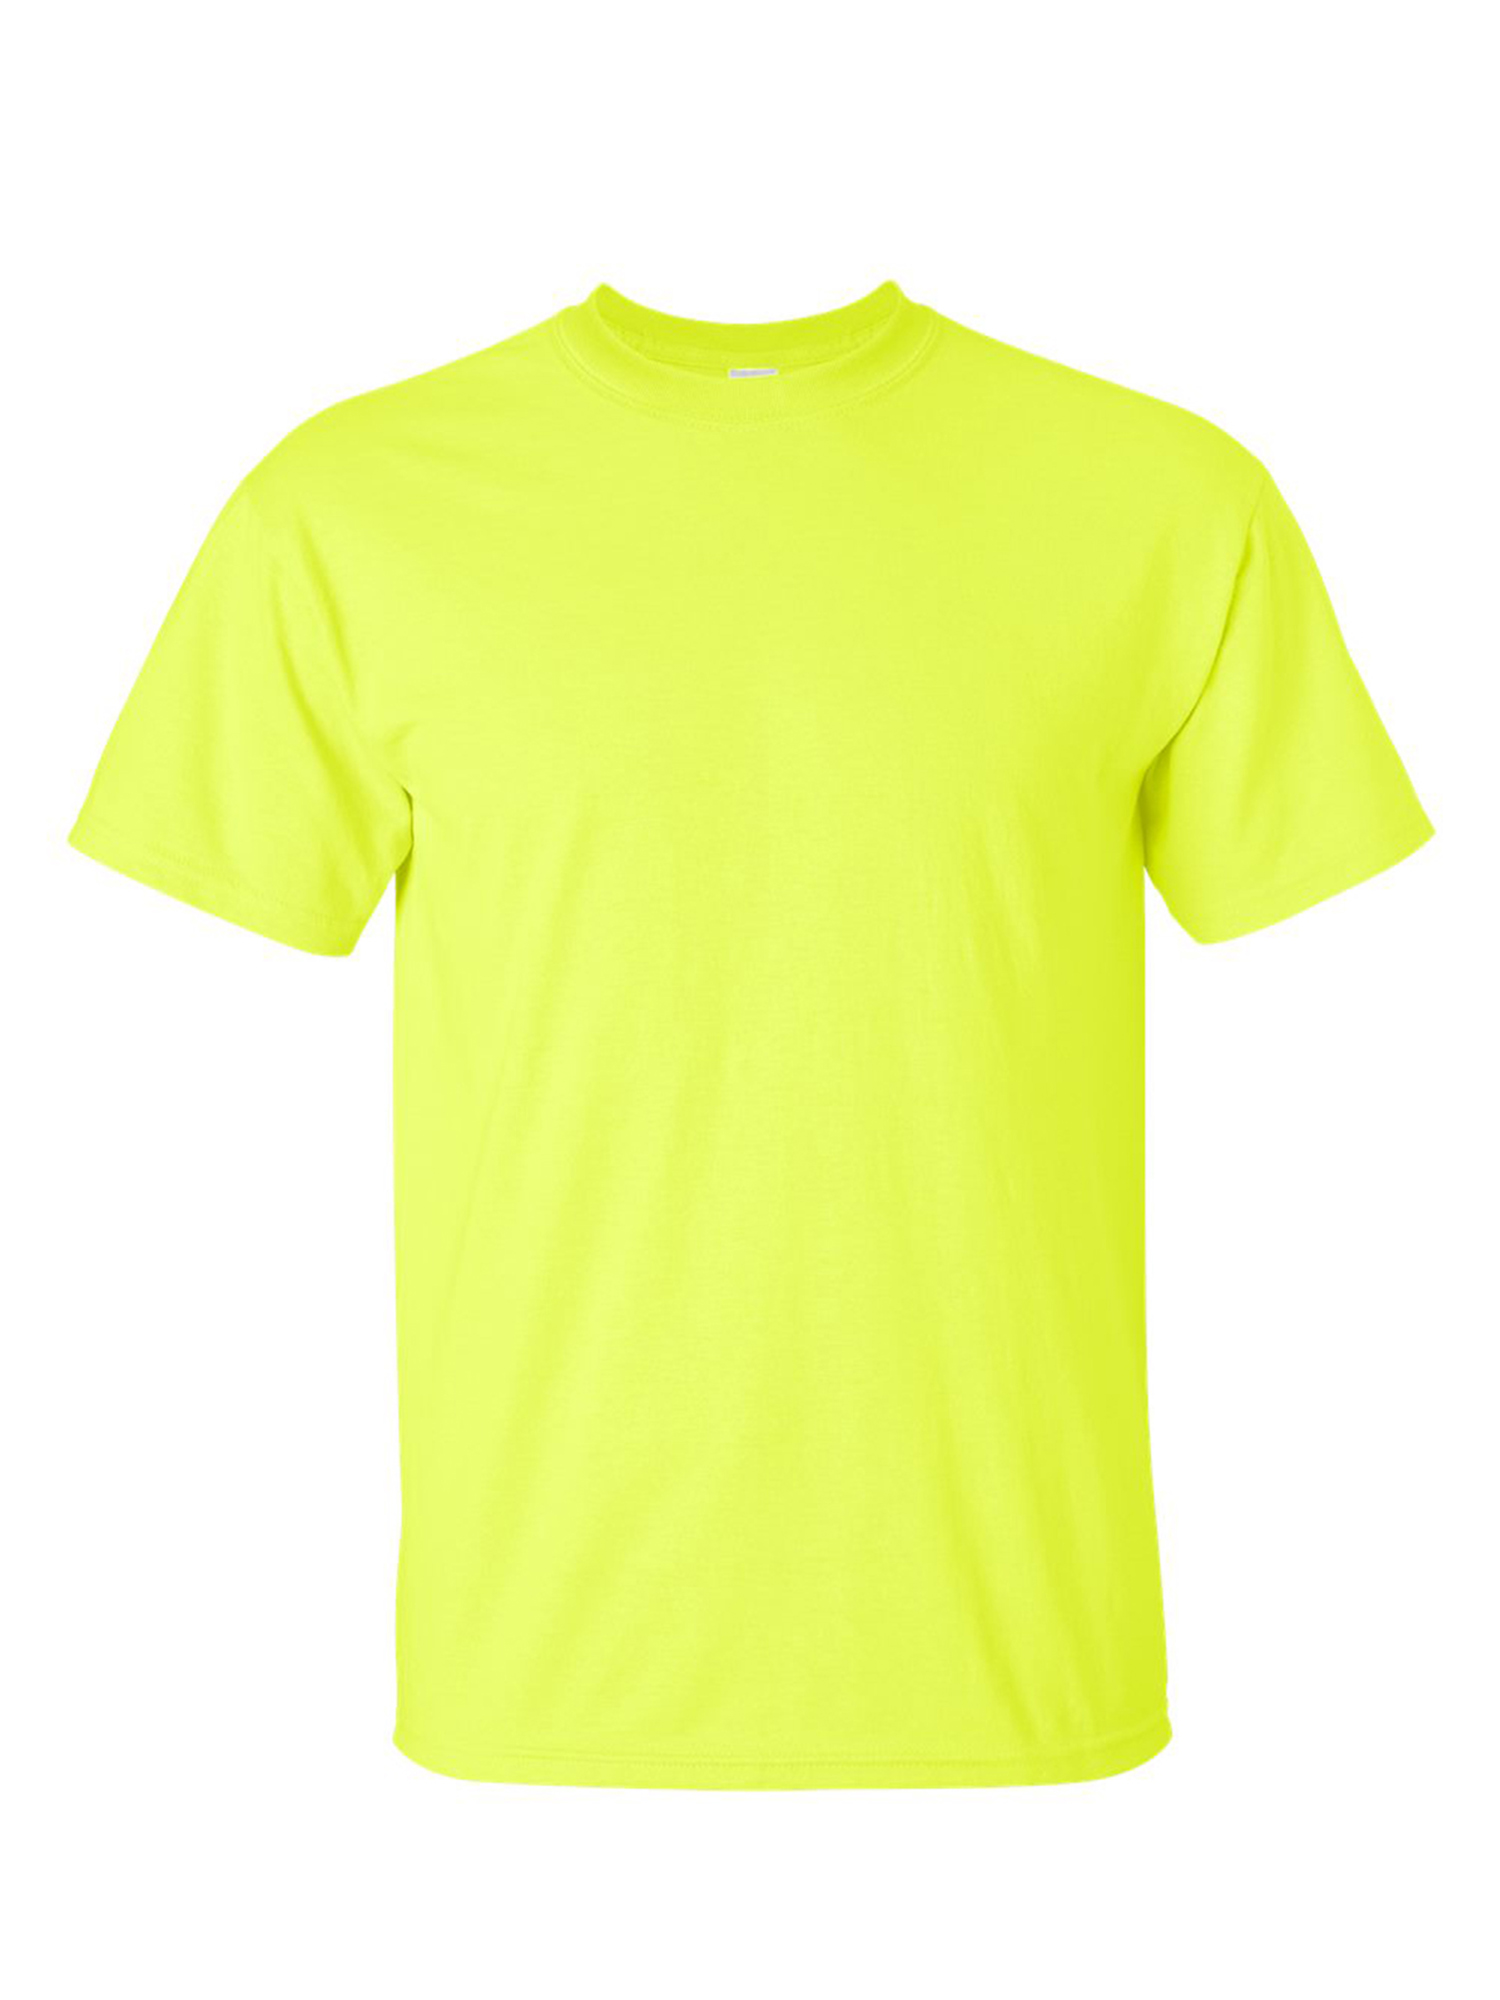 Gildan Ultra Cotton Tall T-Shirt - 2000T Safety Green T shirts XLT T Shirts for Men 2XLT 3XLT Big & Tall T Shirts Tall Mens Shirts Big & Tall T Shirts Big and Tall T Shirt for Men Tall Sizes - image 1 of 2